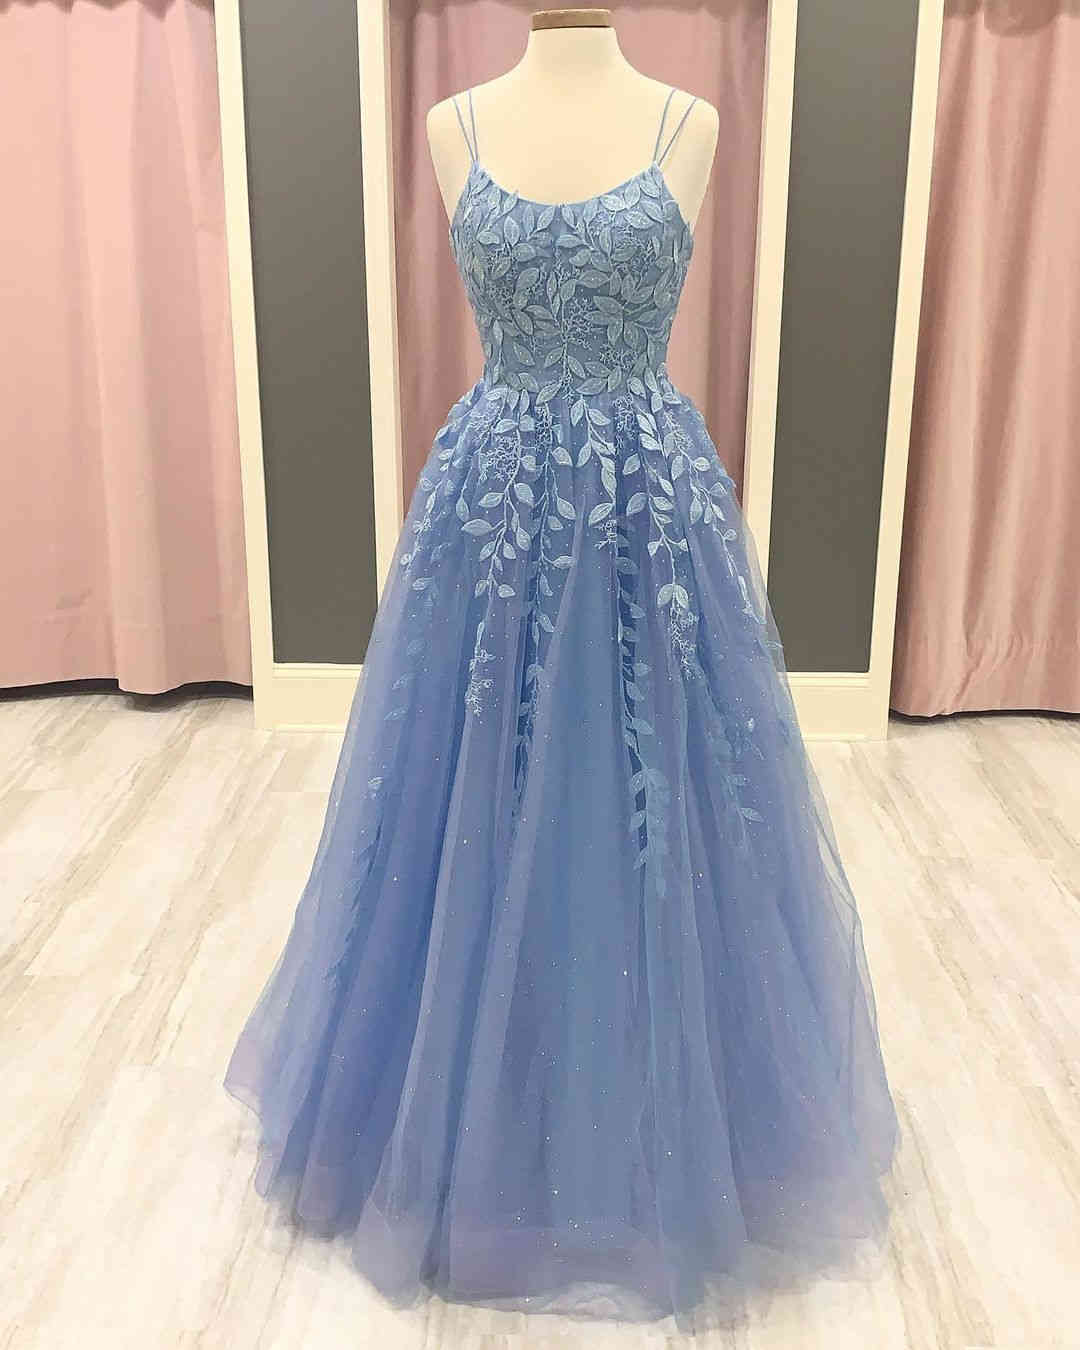 Elegant Spaghetti Straps Lilac Prom Dress with Appliques?Elegant Spaghetti Straps Lilac Prom Dress with Appliques?long dress,cheap dress,evening dress,bridal dress,prom dress 2021